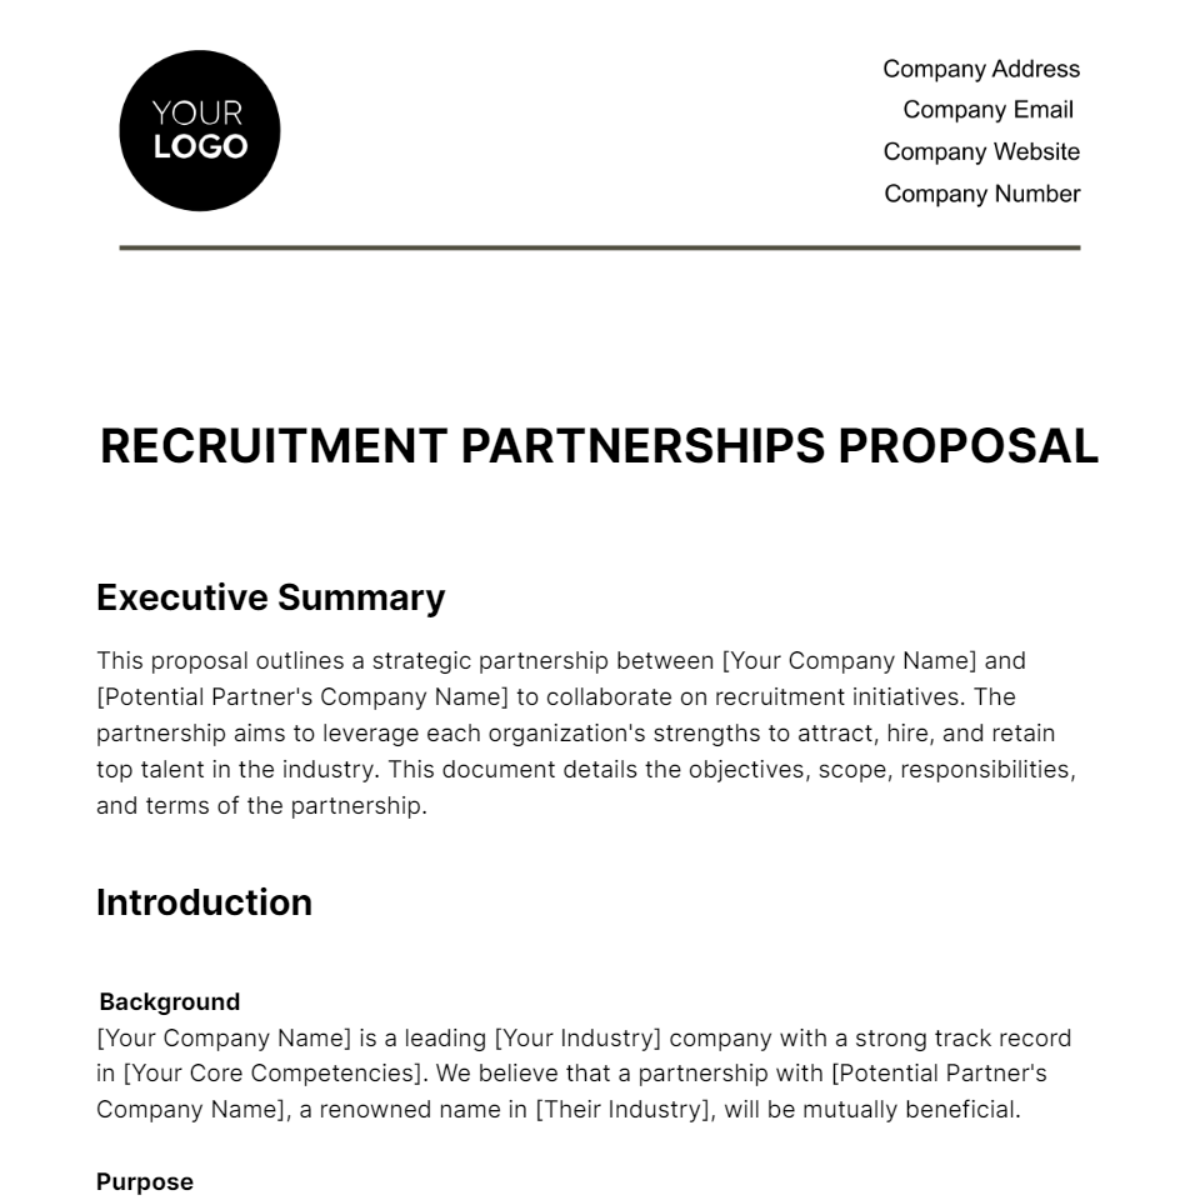 Recruitment Partnerships Proposal HR Template